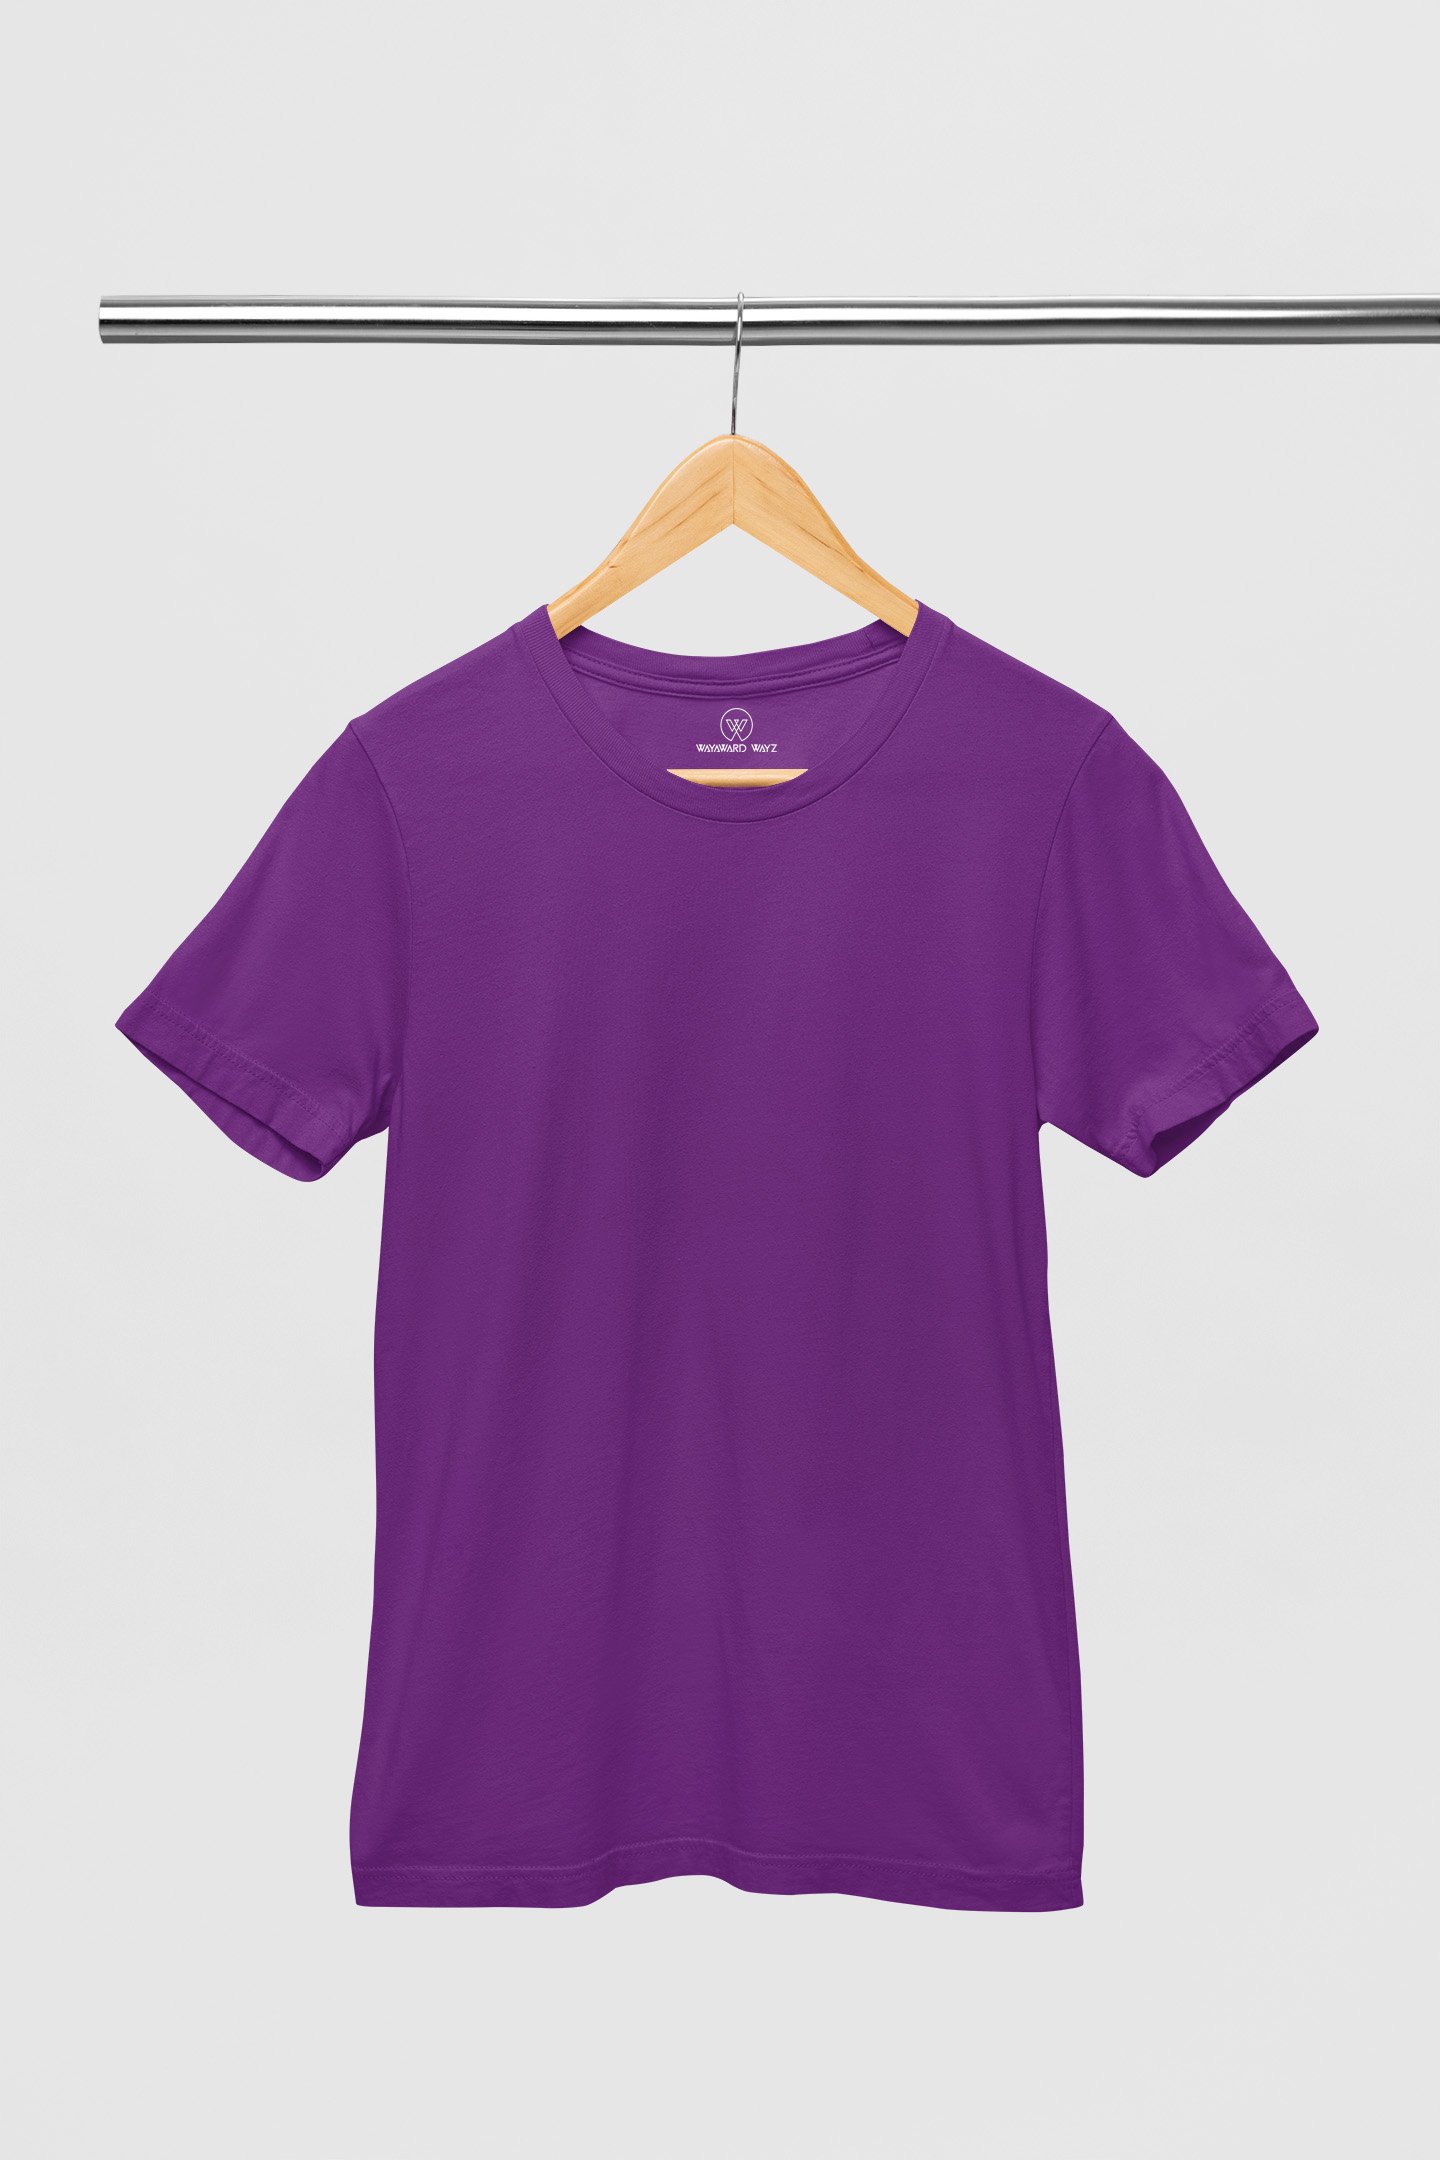 Purple Solid T-Shirt by Wayward Wayz Front